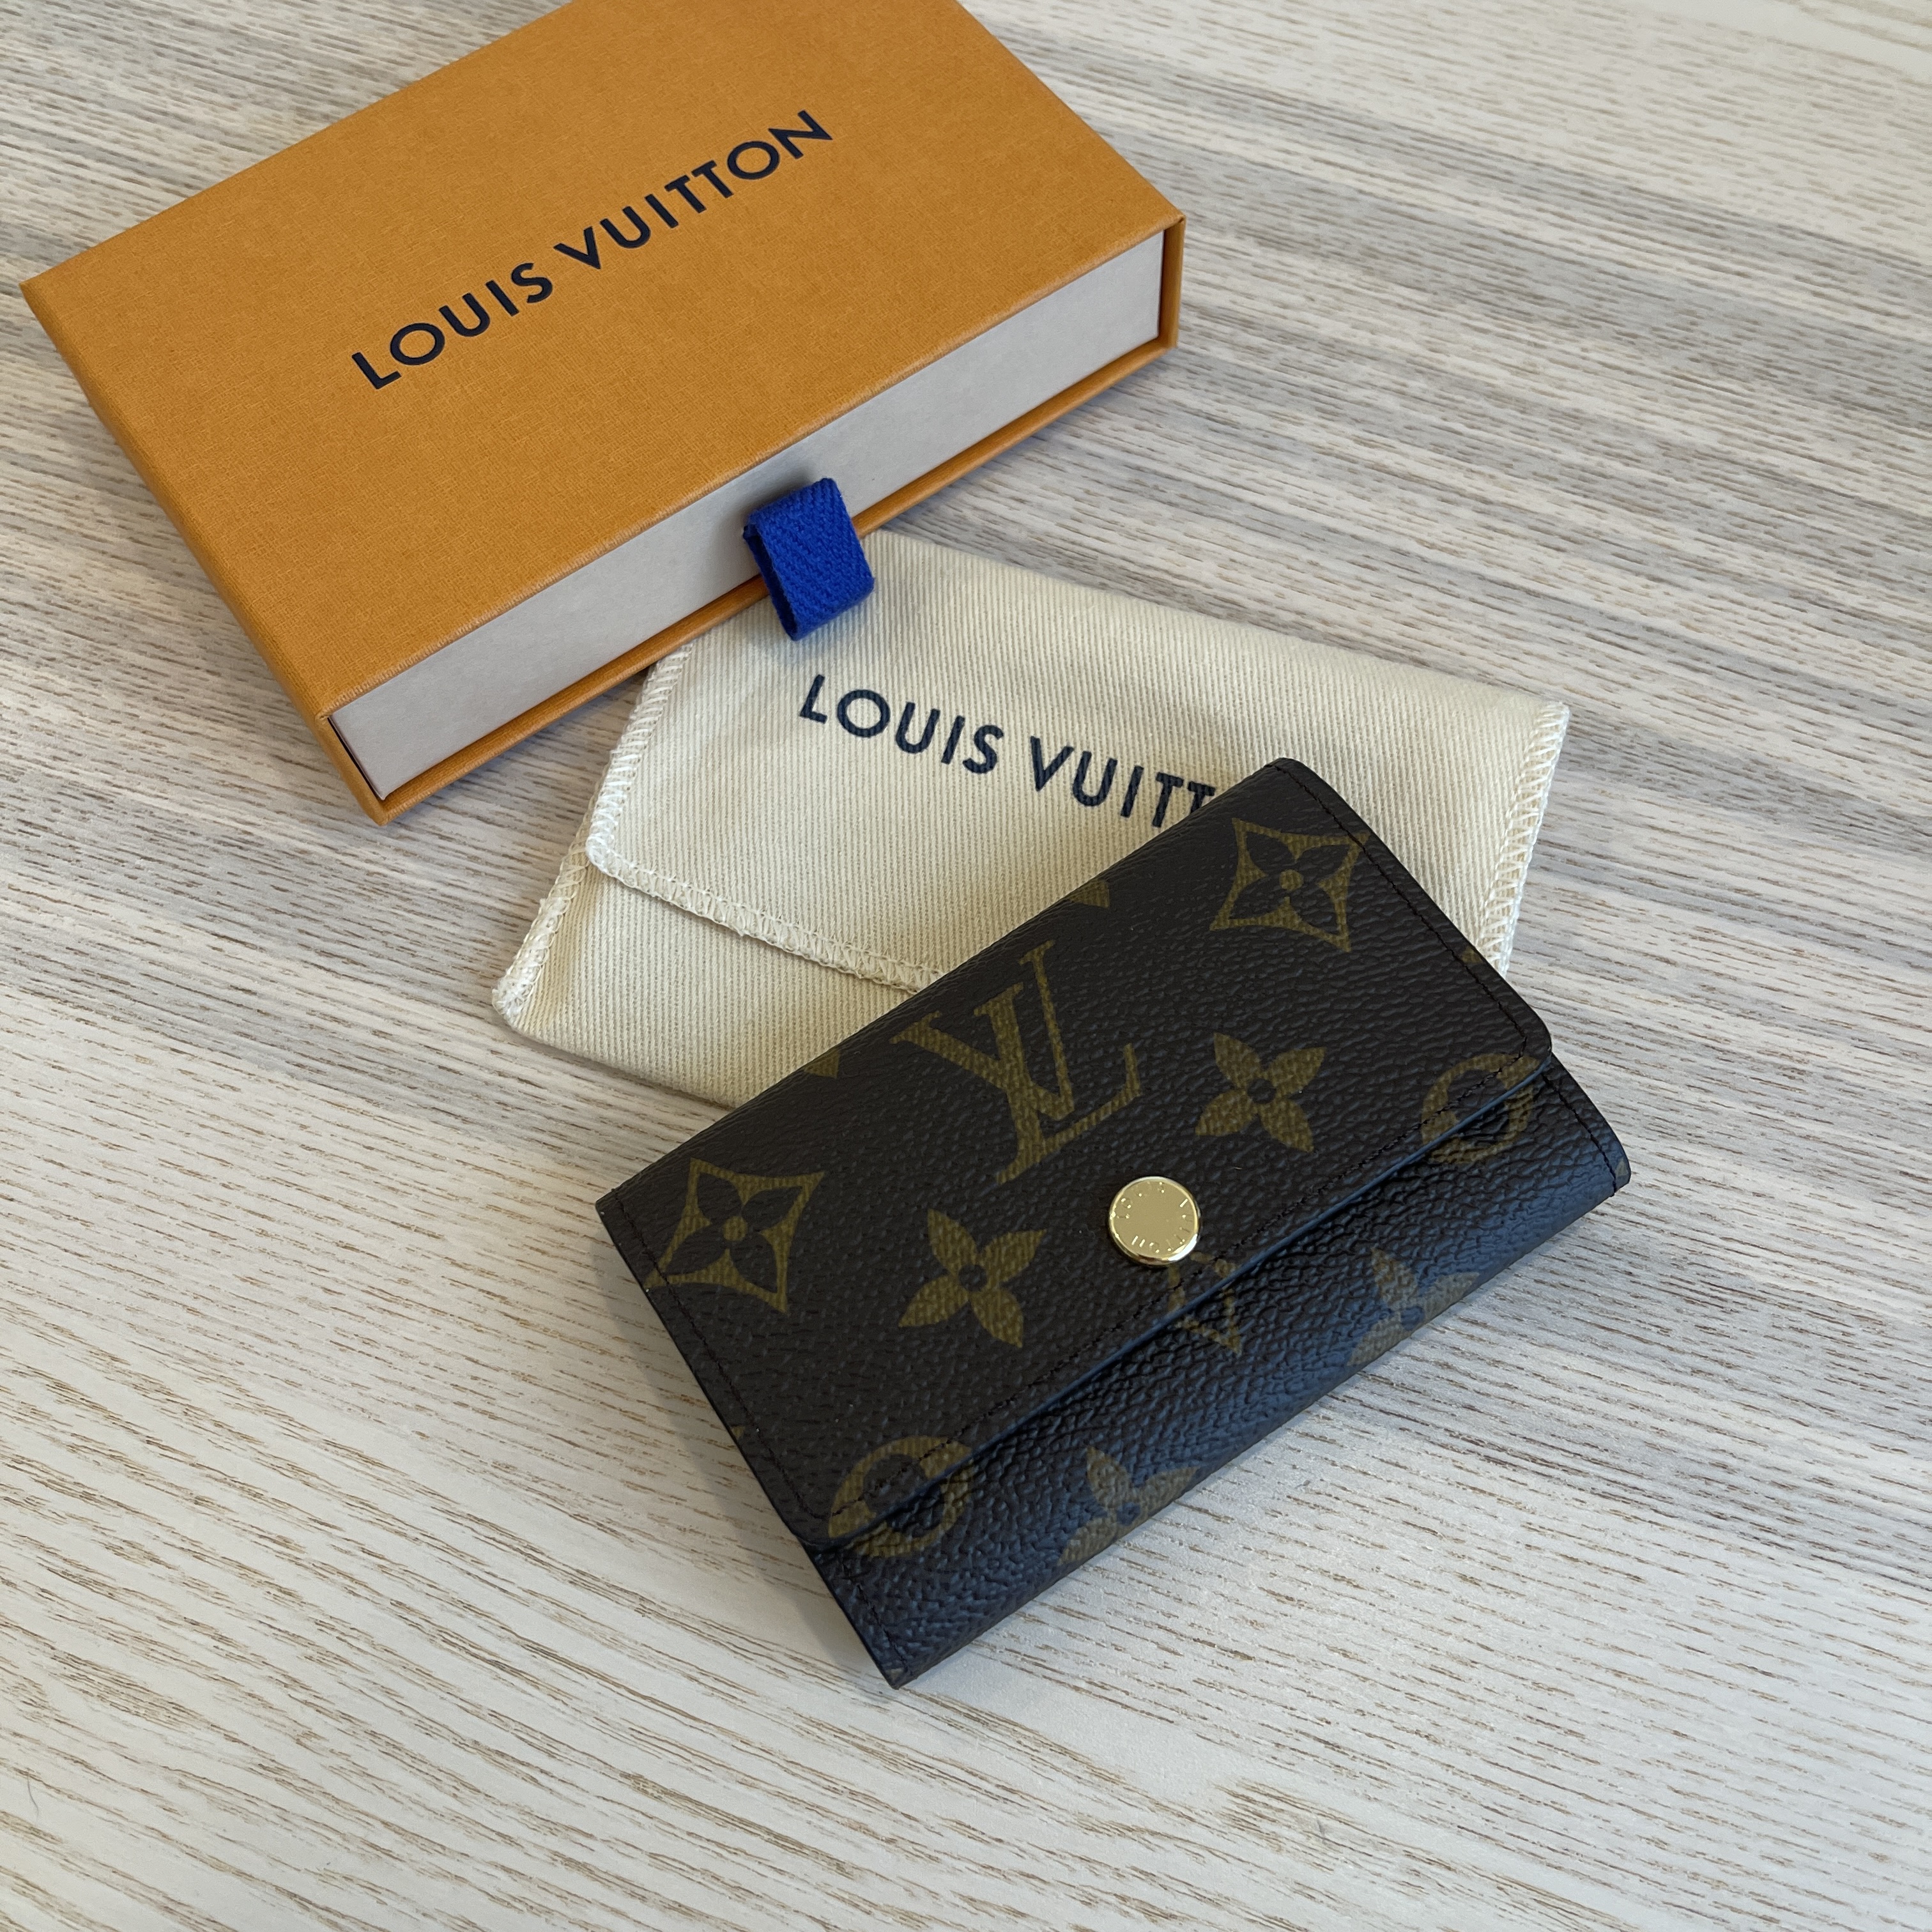 Louis Vuitton 6 Key Holder